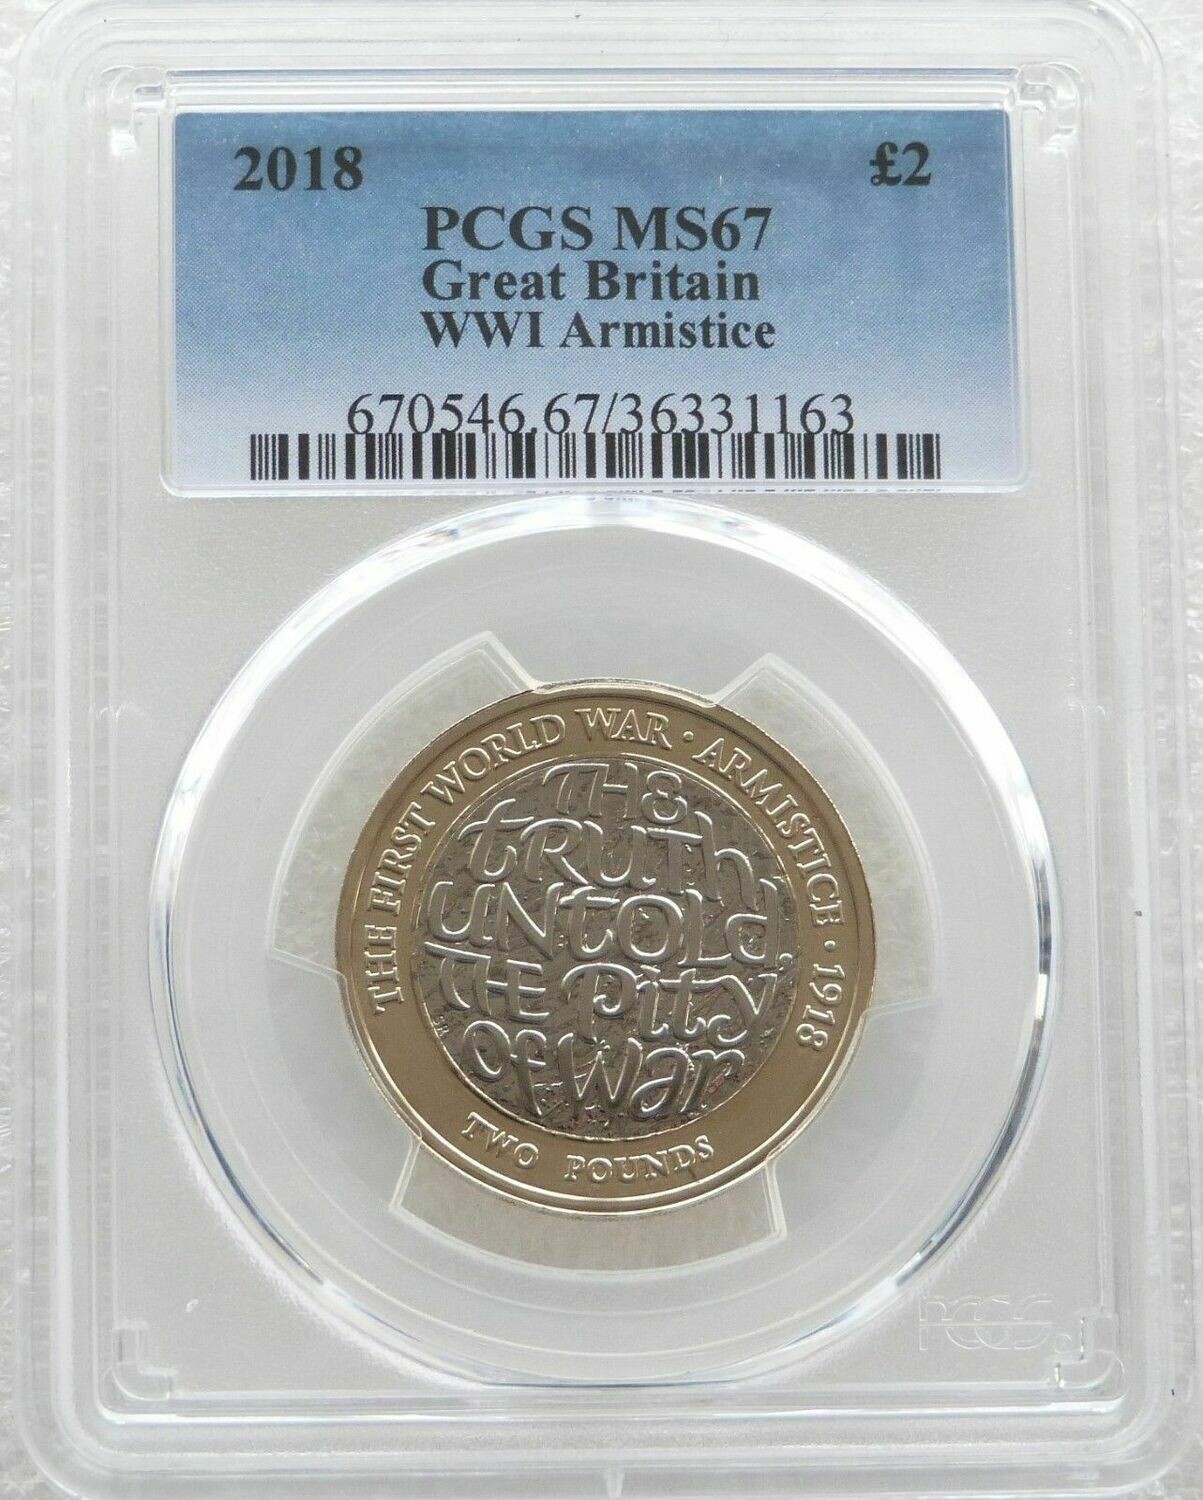 2018 First World War Armistice £2 Brilliant Uncirculated Coin PCGS MS67